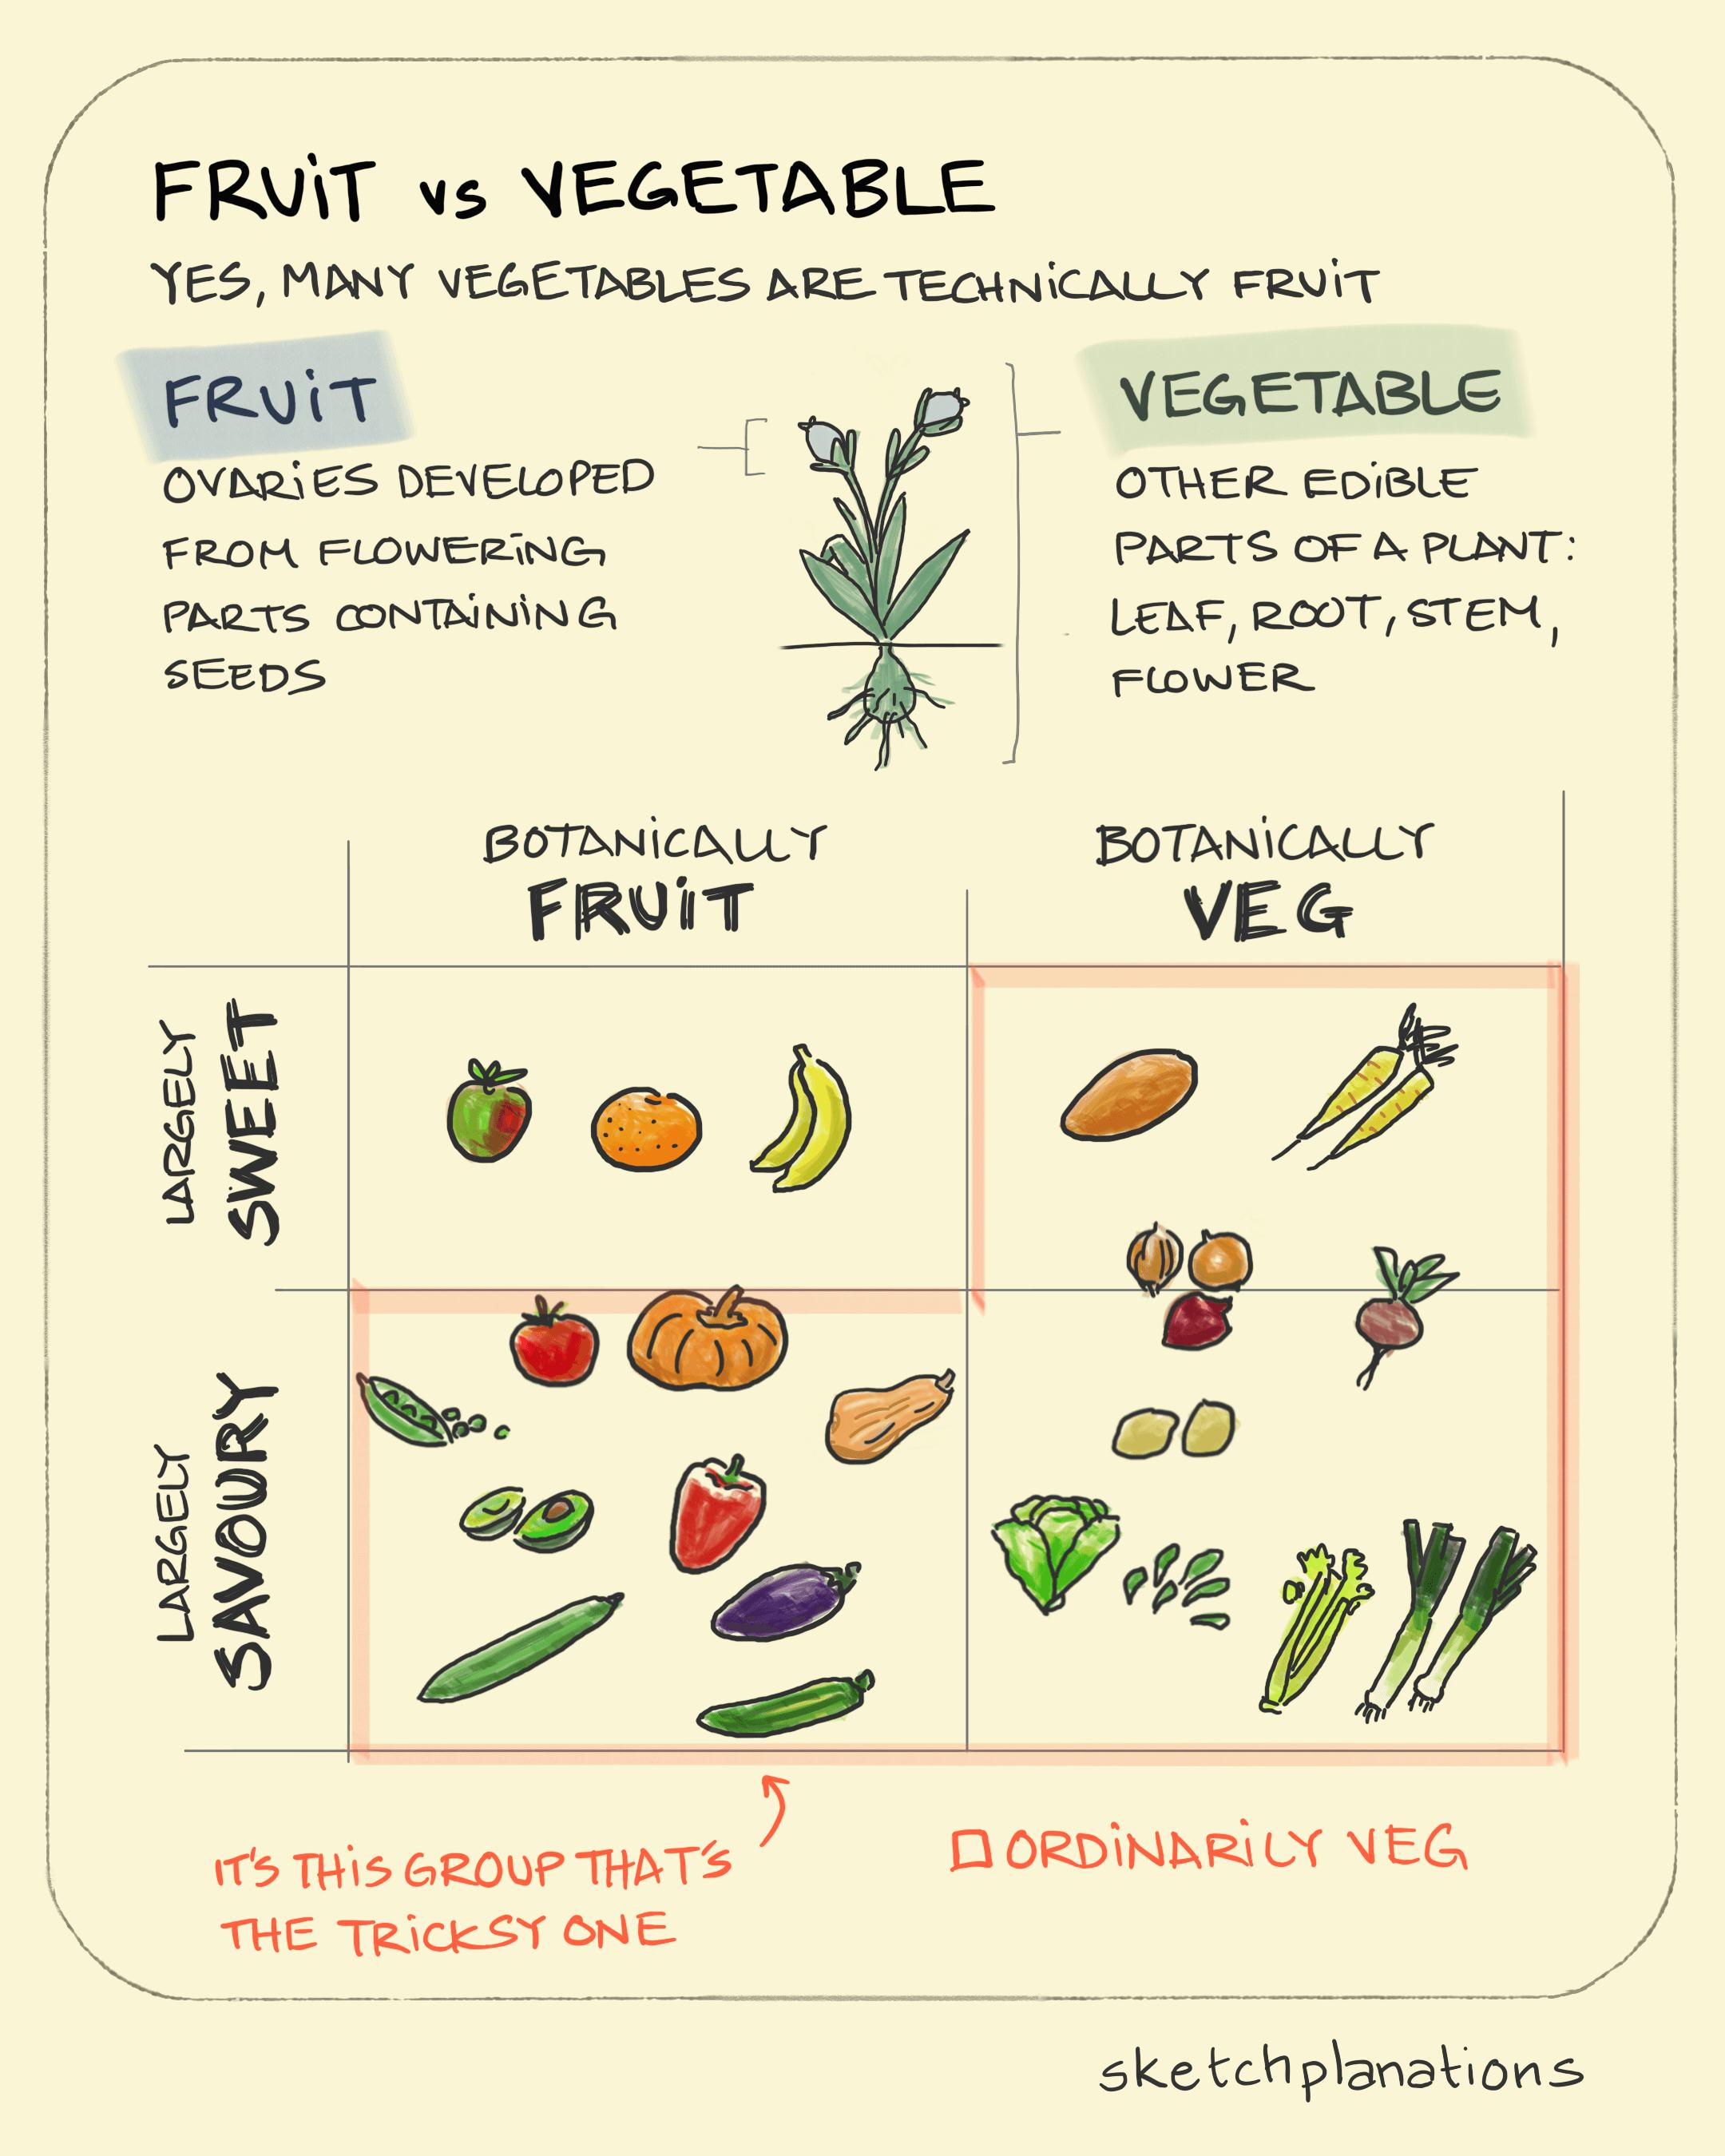 Fruit vs vegetable - Sketchplanations